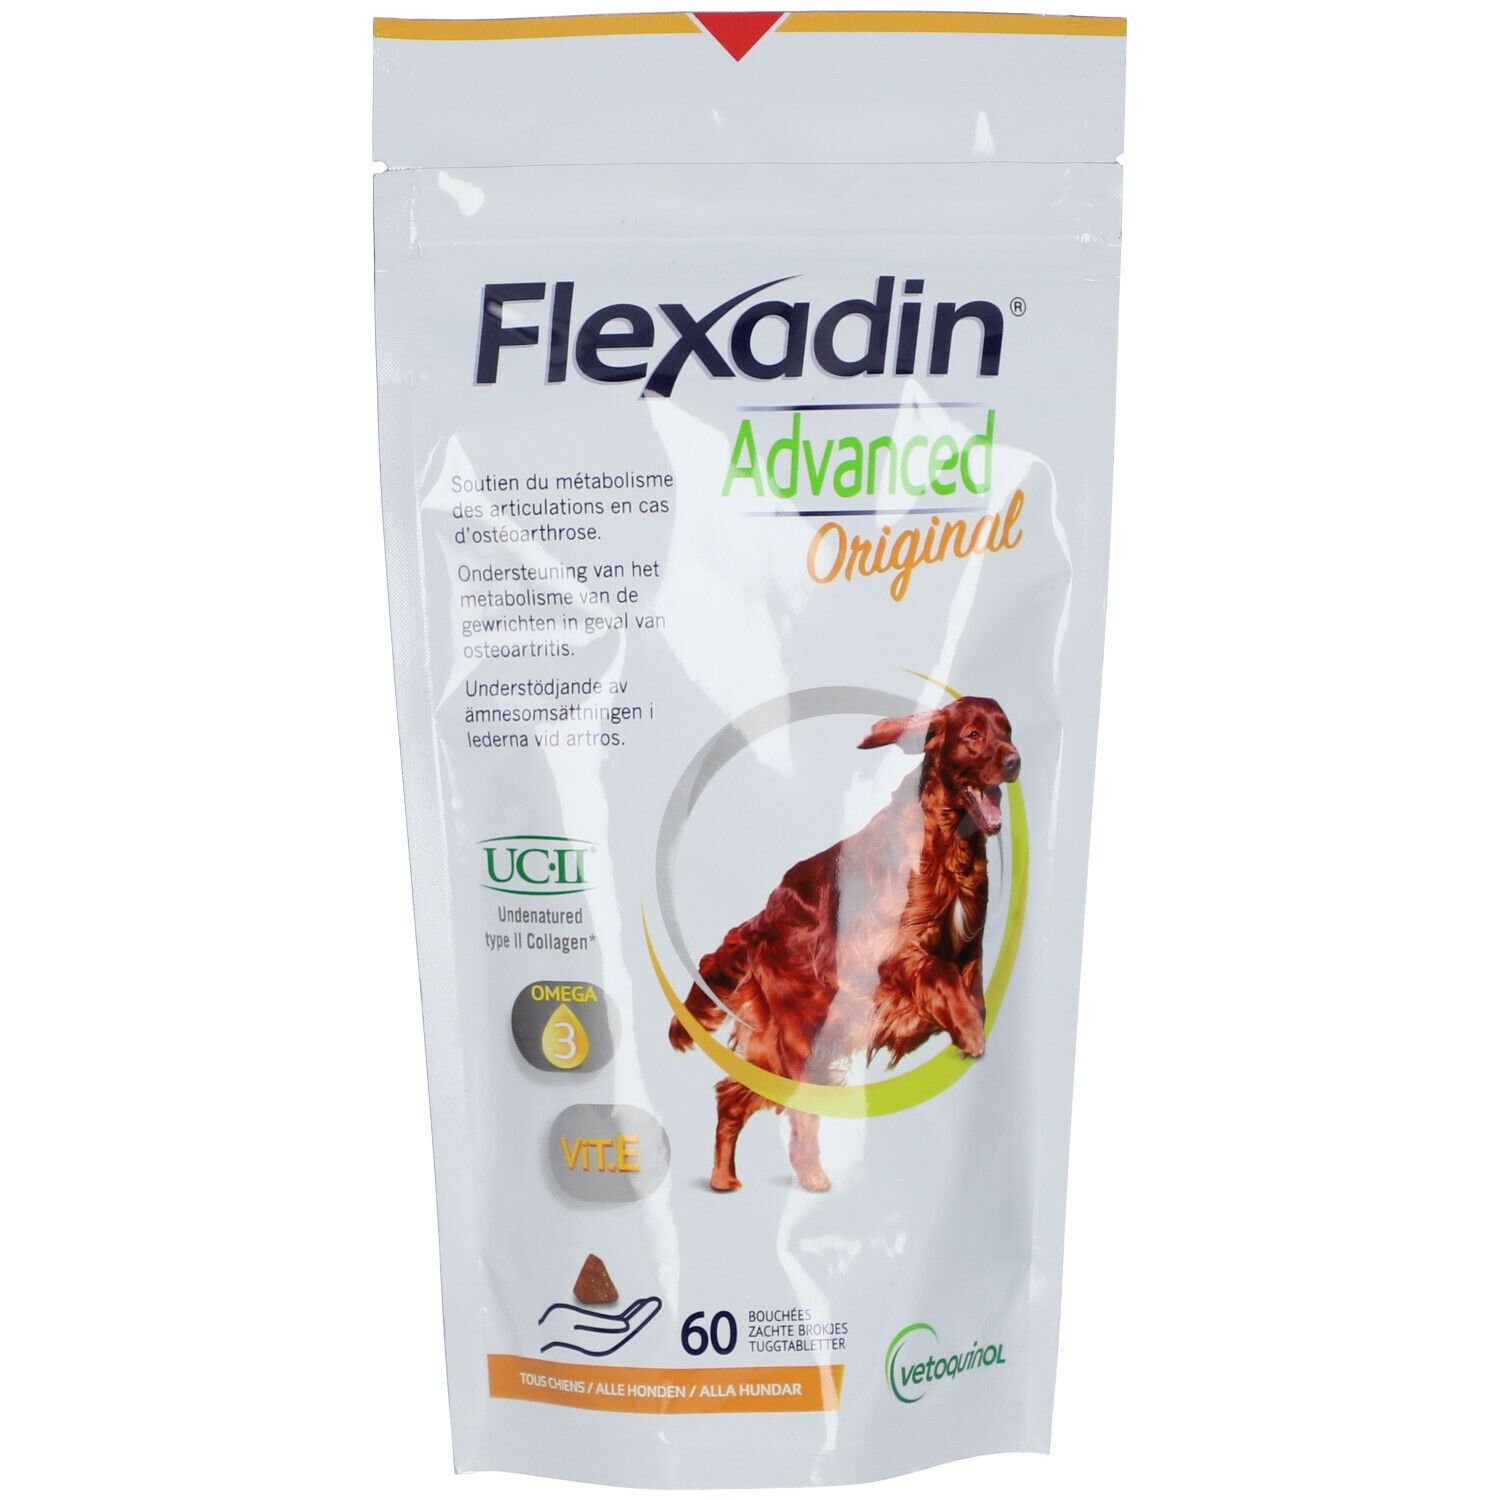 Flexadin® Advanced Original Chien